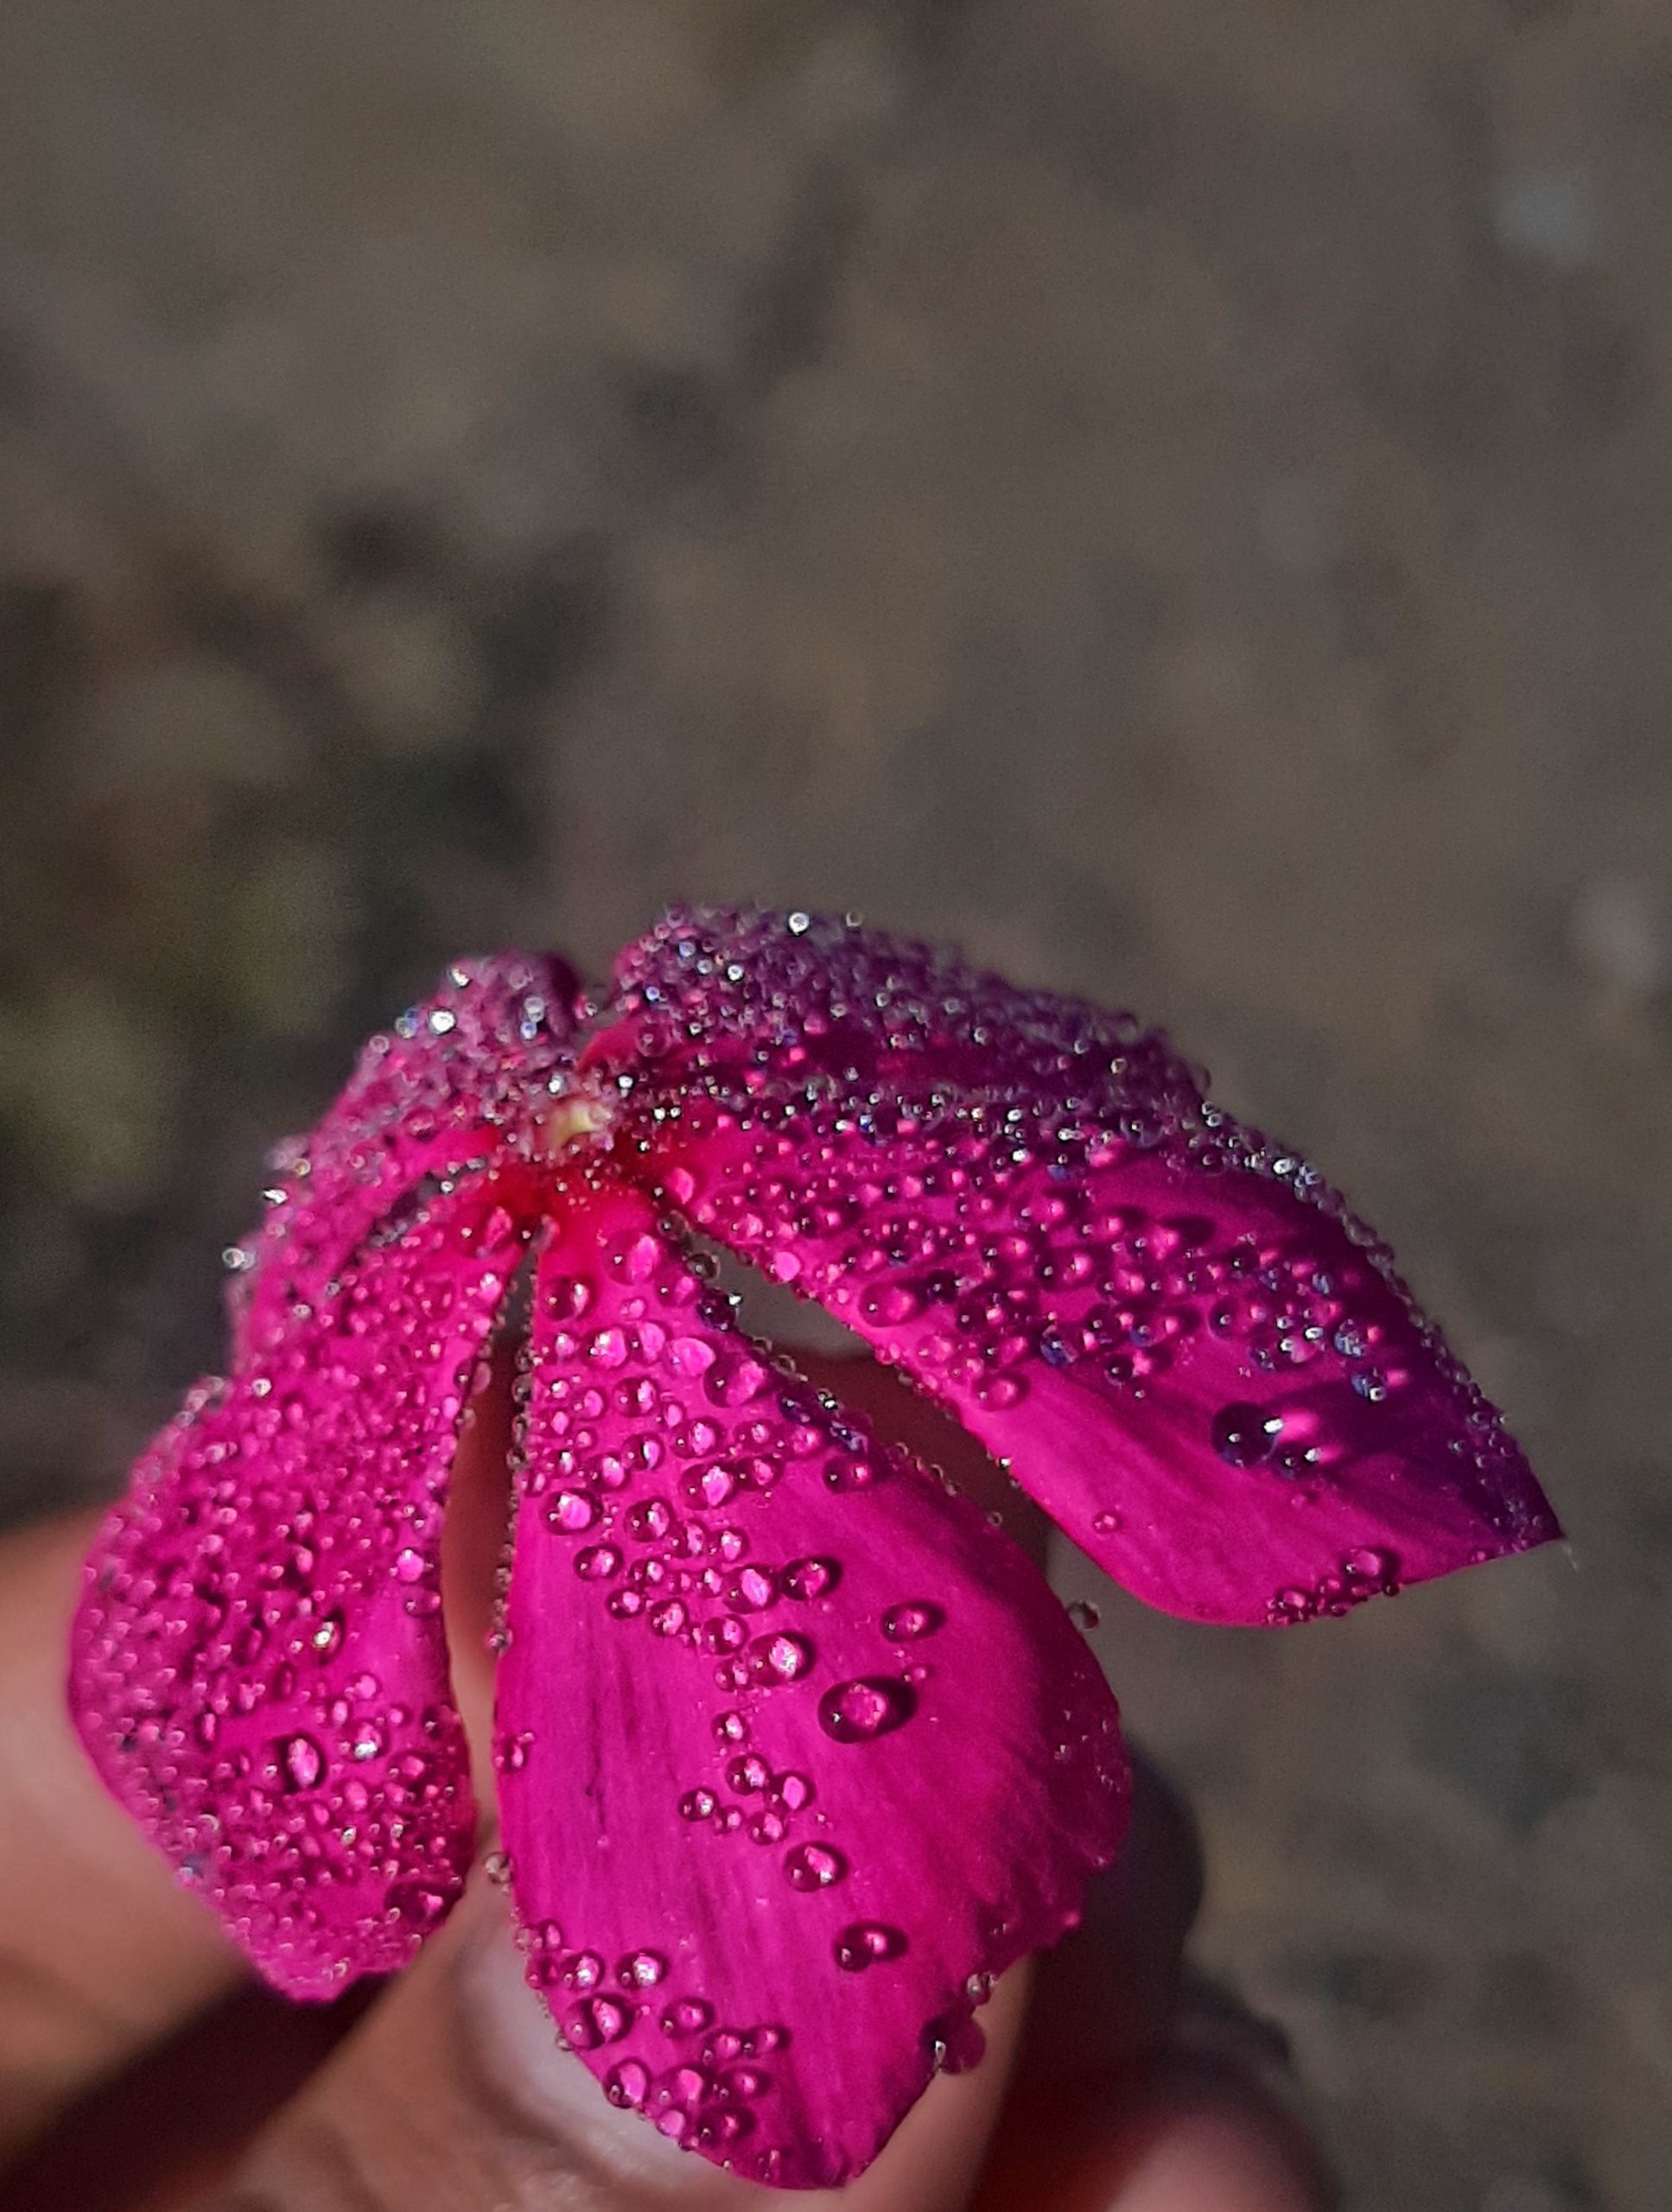 dew drops on a flower